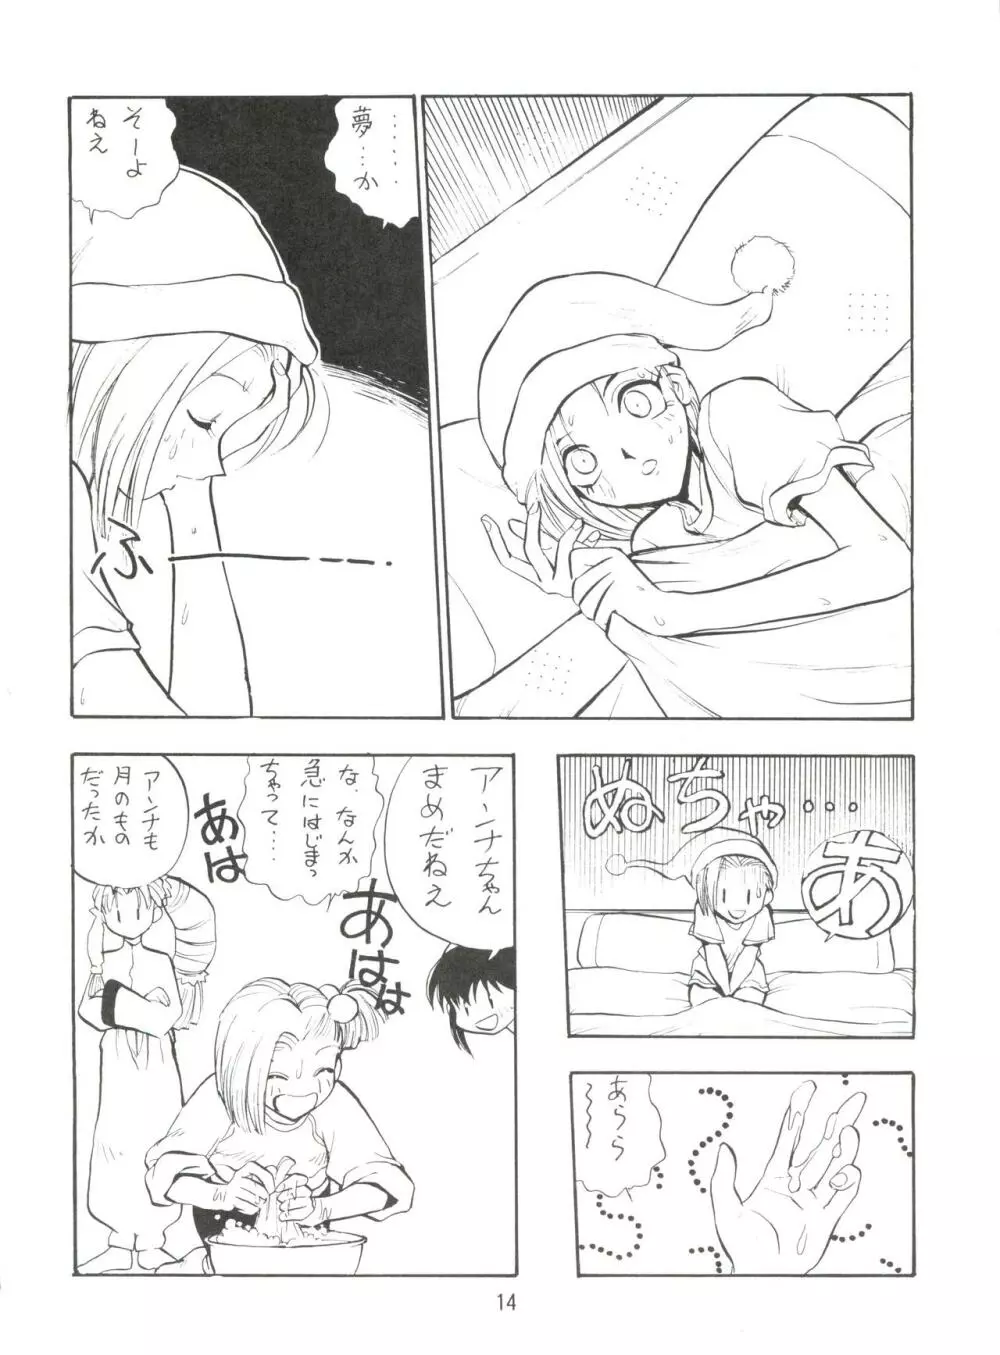 1997 WINTER 電撃犬王 15ページ